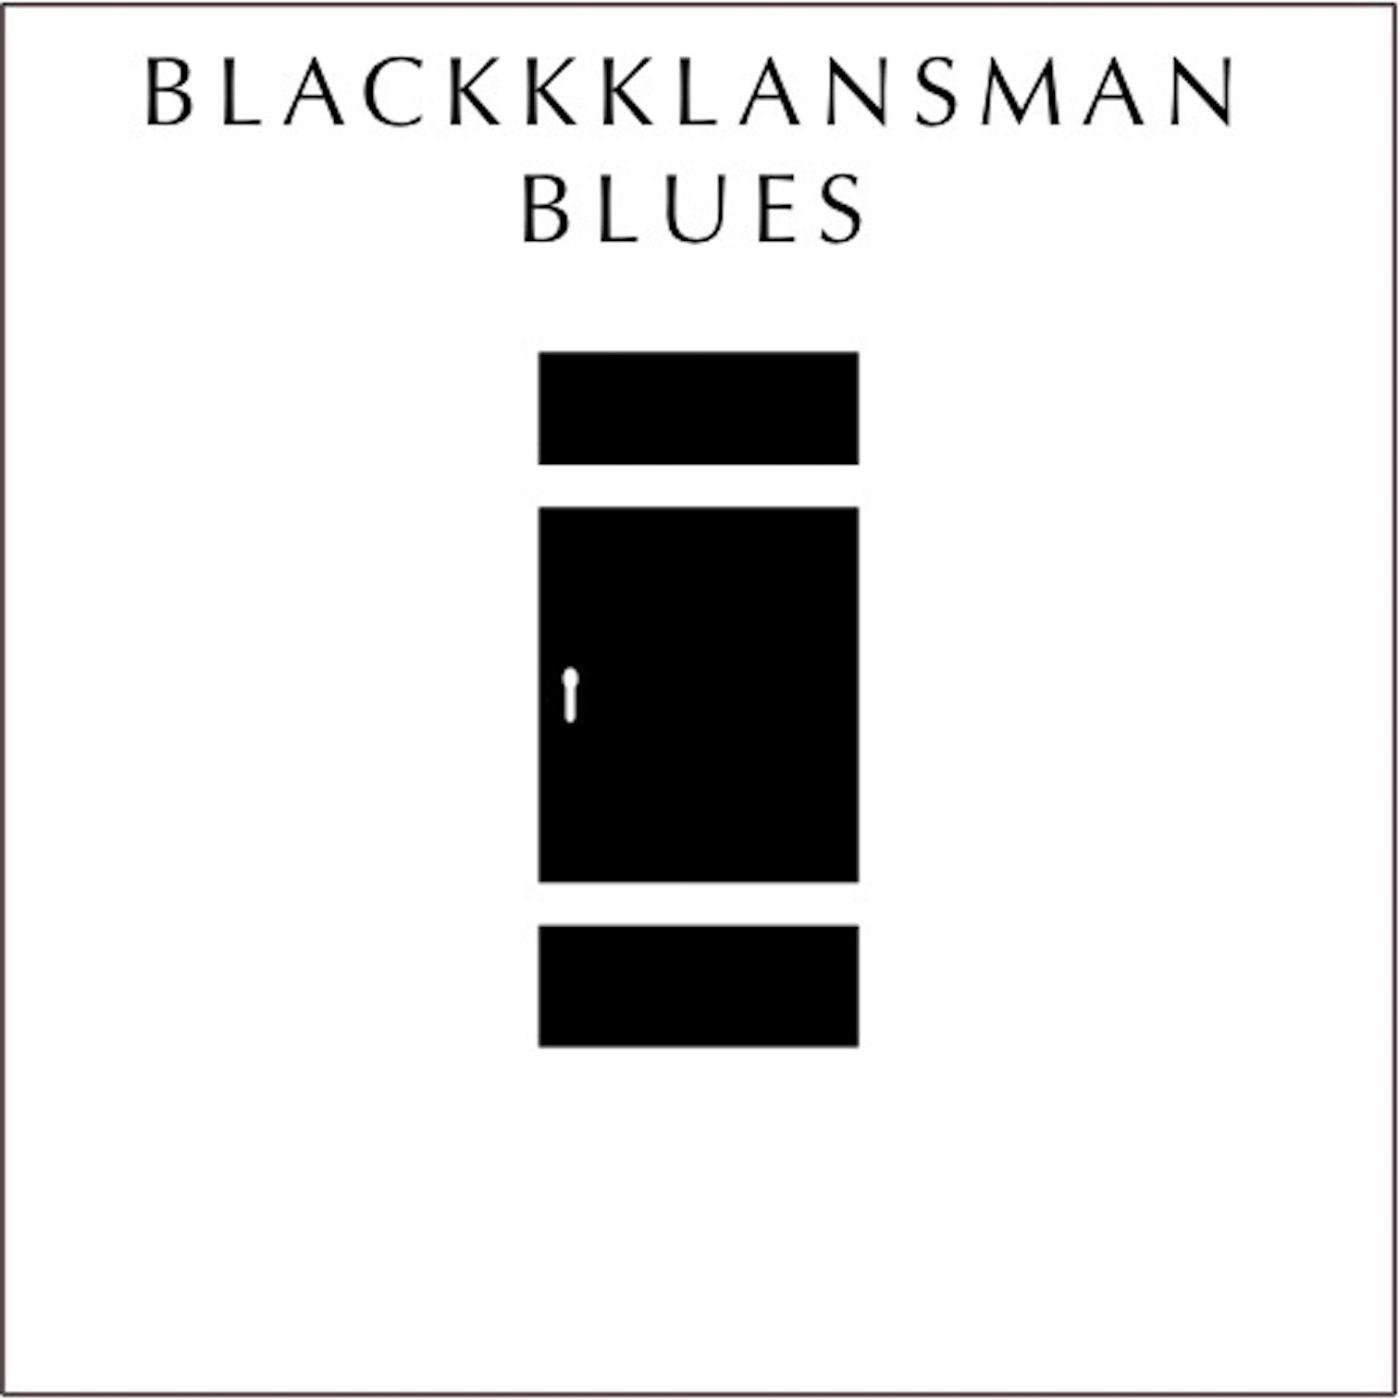 Blackkklansman Blues